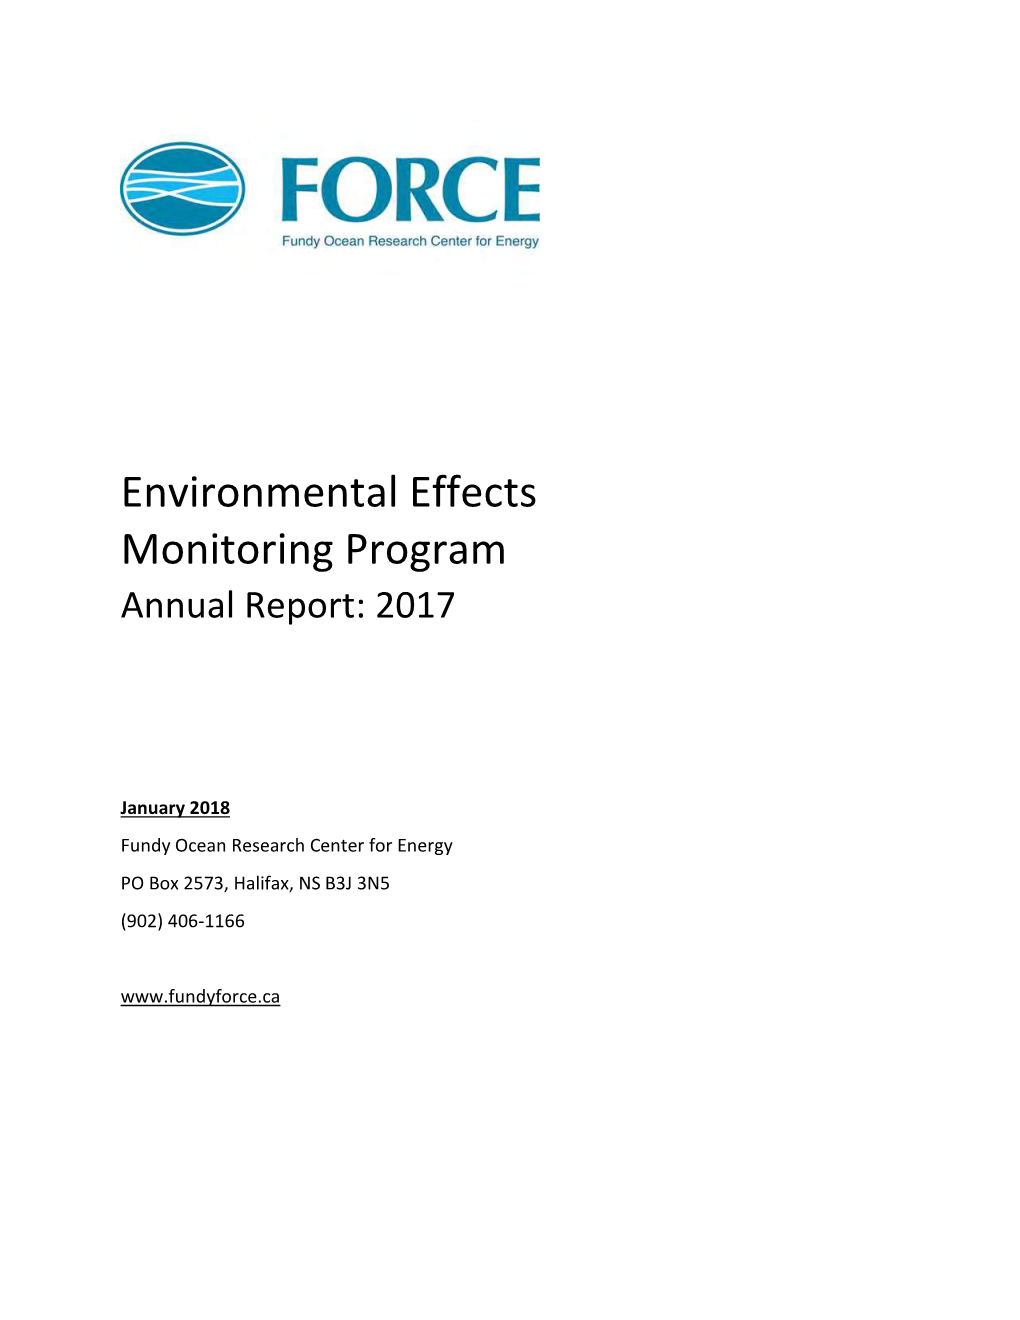 Environmental Effects Monitoring Program Annual Report: 2017